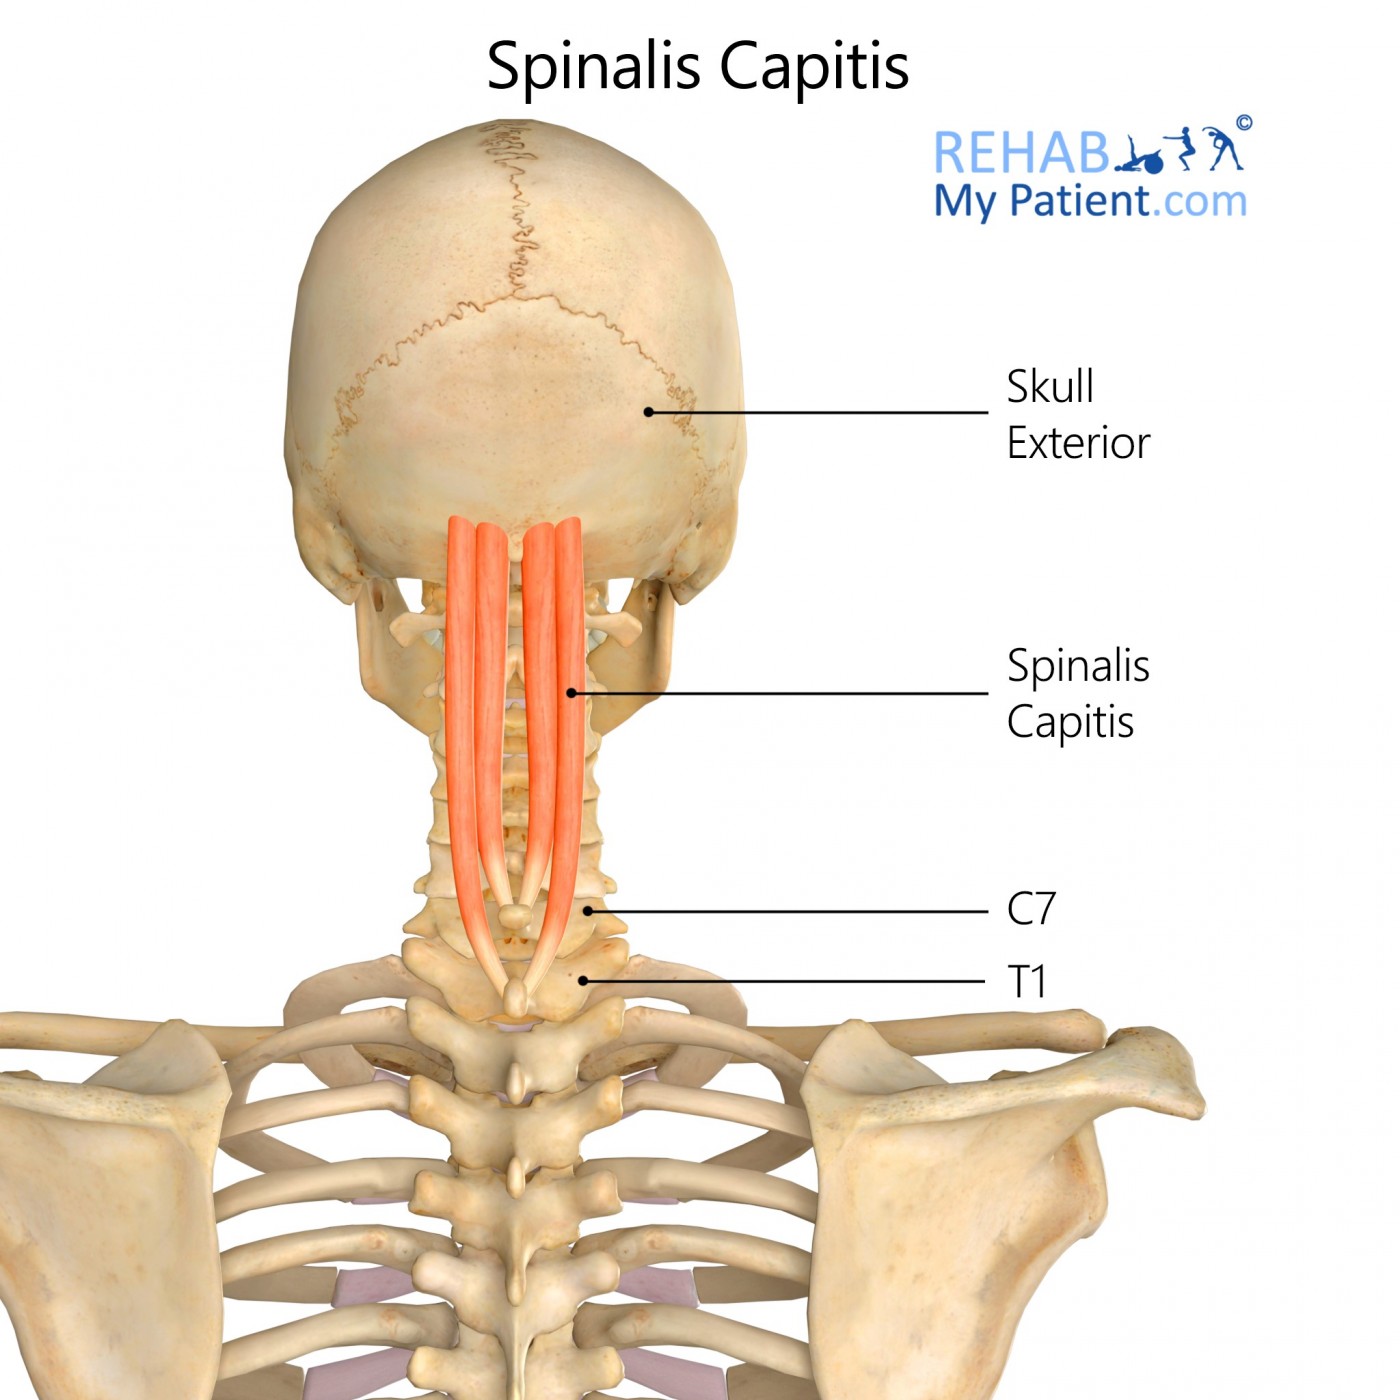 Spinalis capitis